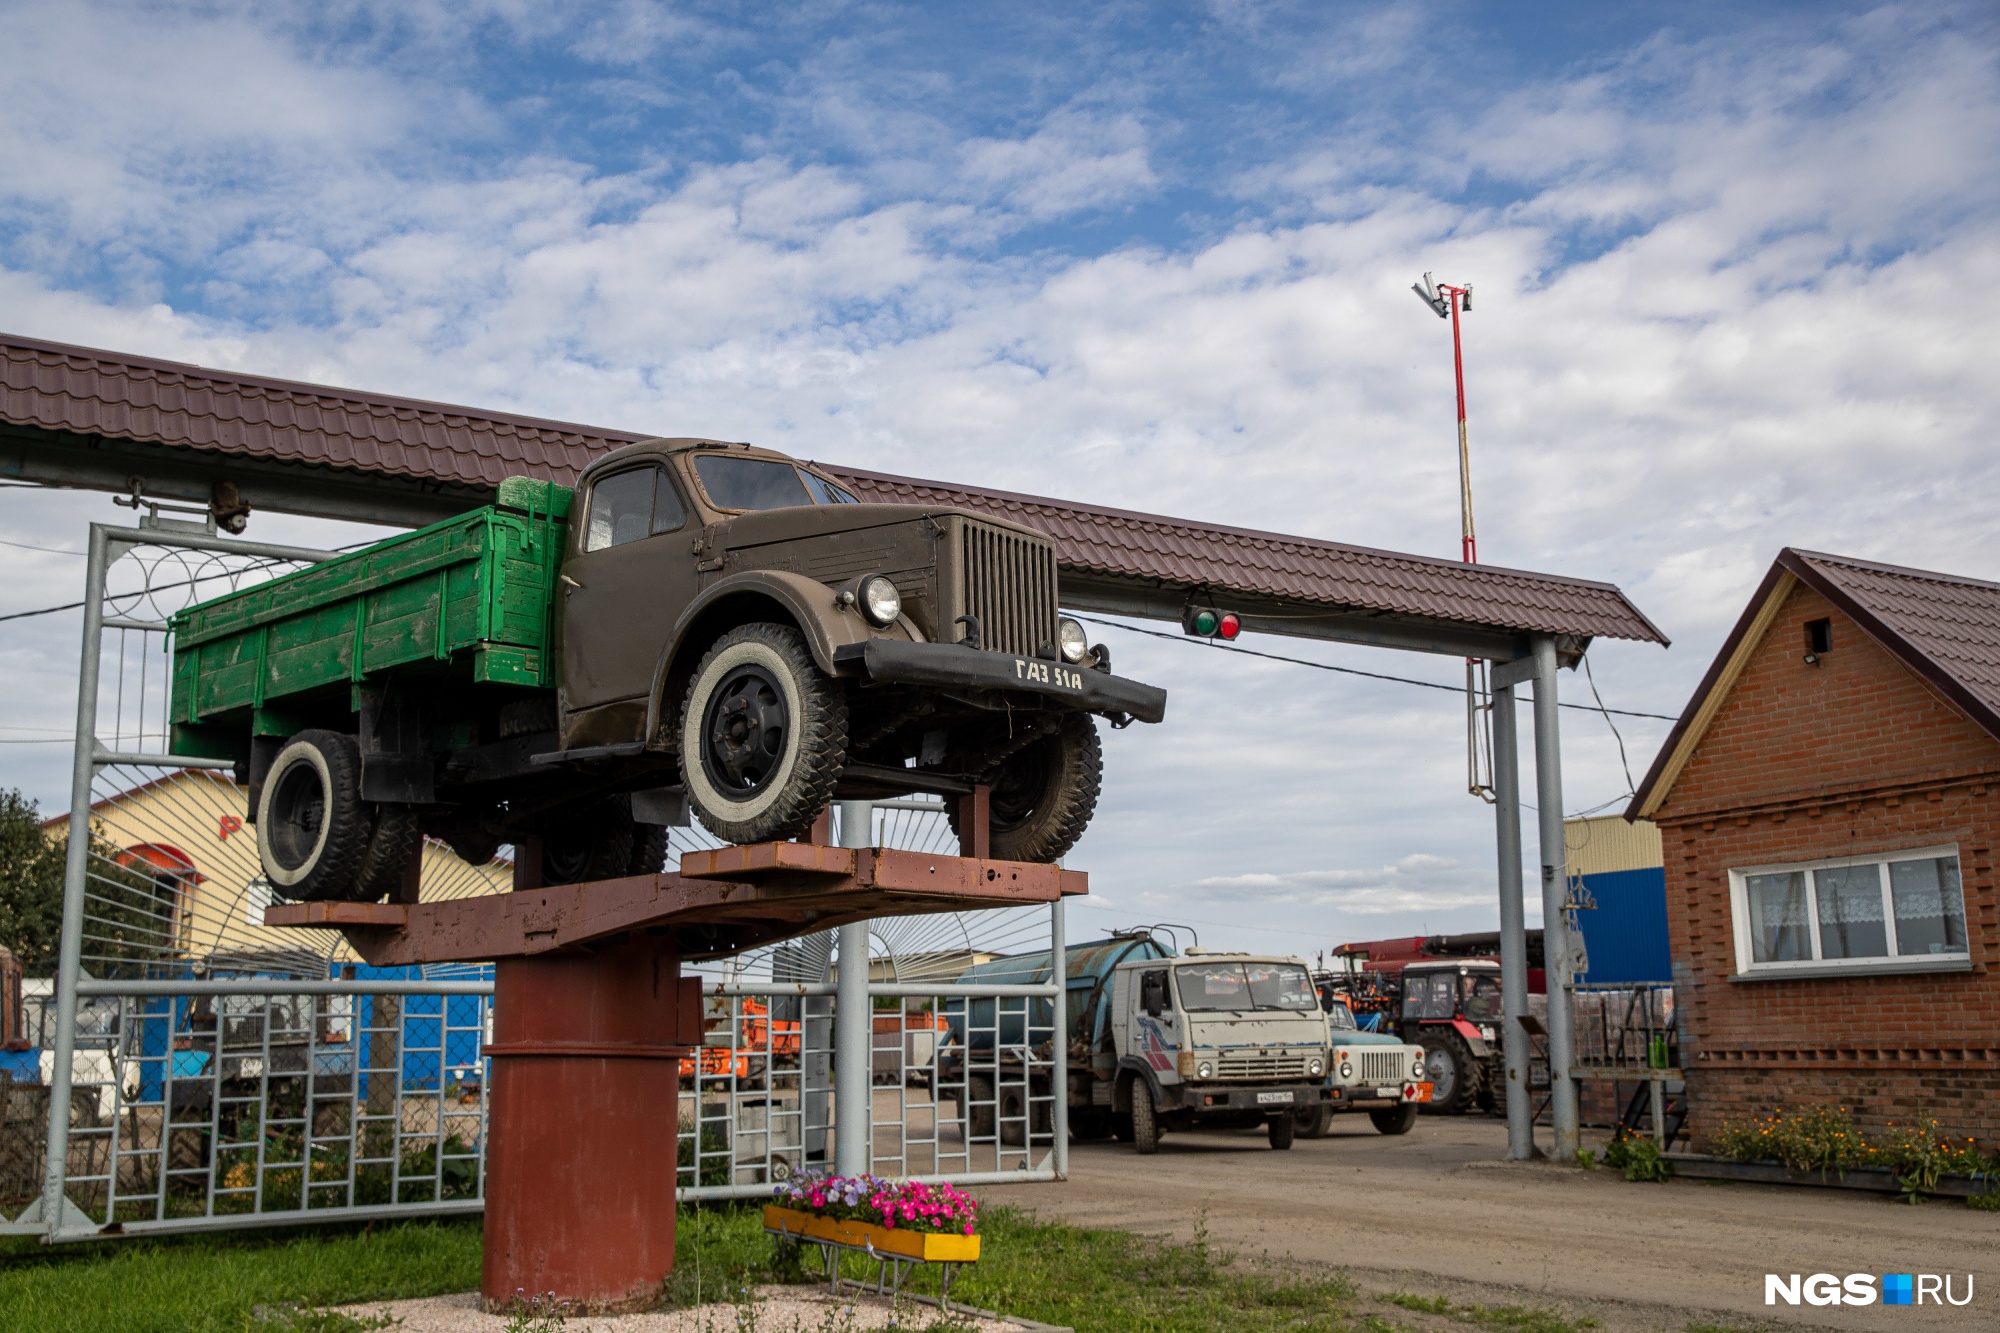 Памятник грузовику возле транспортного предприятия